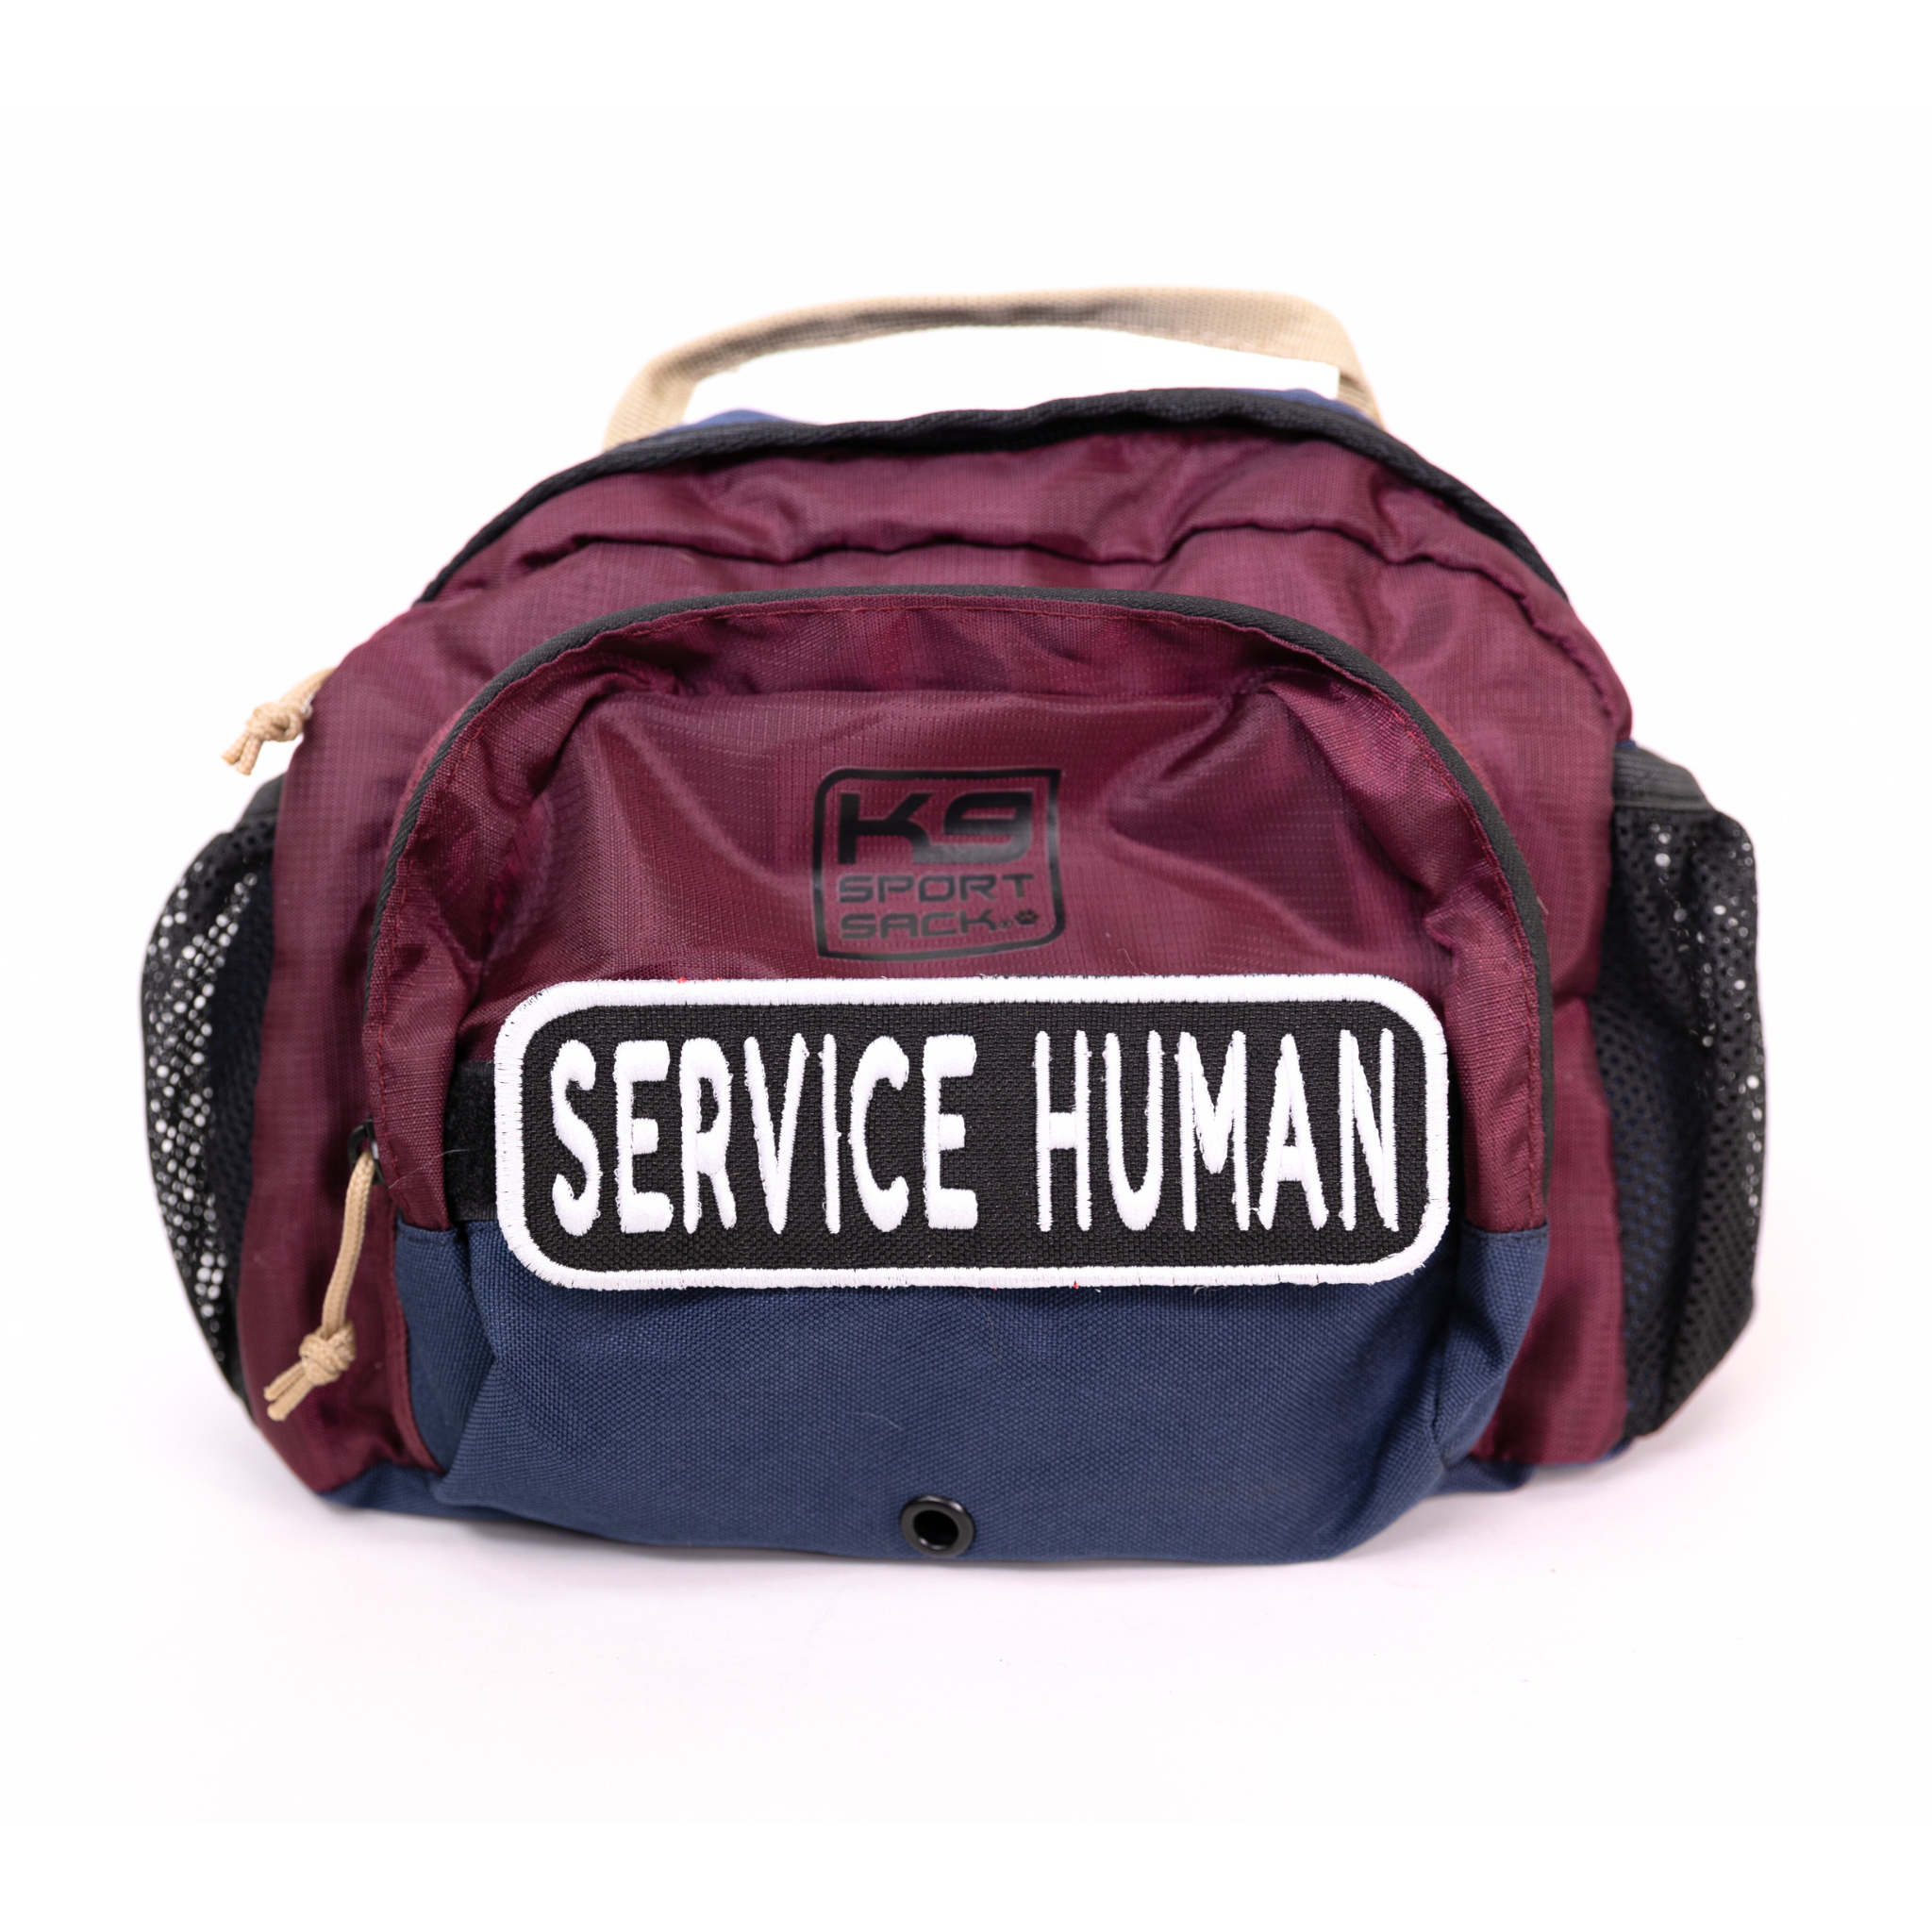 Service Human 2x6 Patch